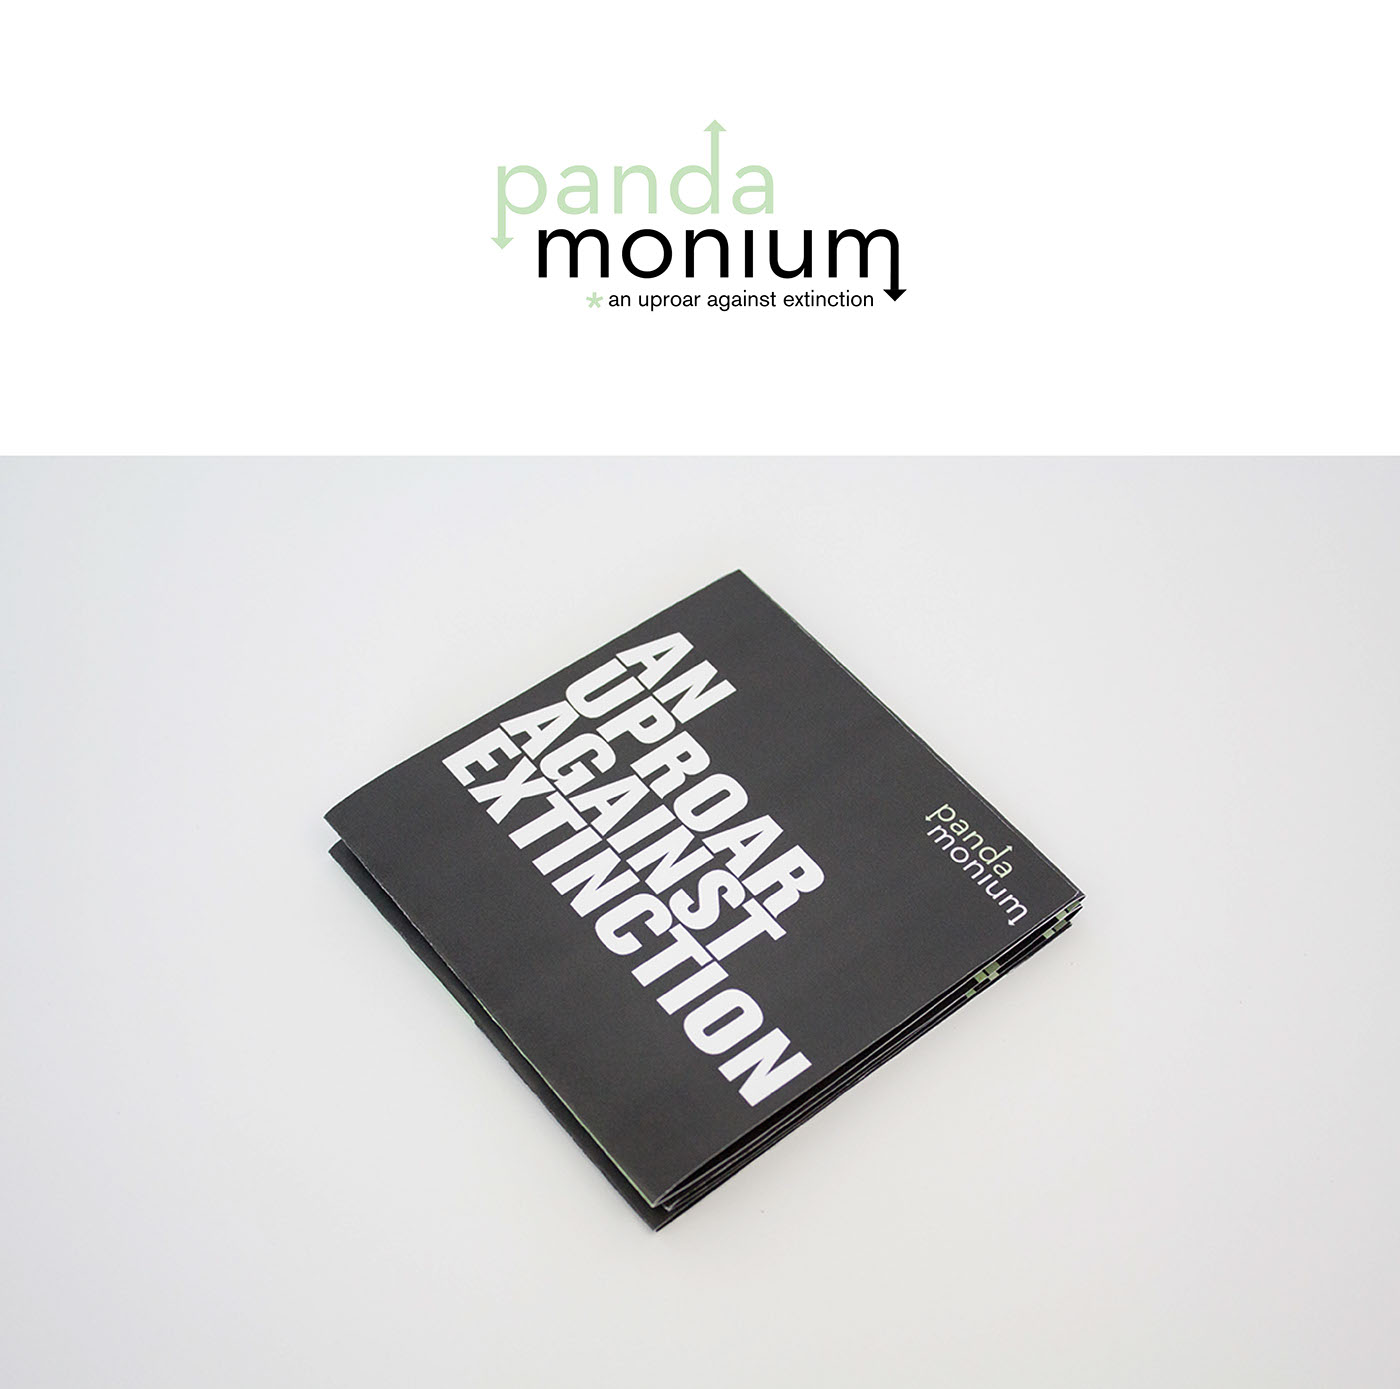 identity package design  Playing Cards Exhibition  pandas SCAD pandamonium Extinction green icons accordion fold Booklet Website Vehicle Wrap